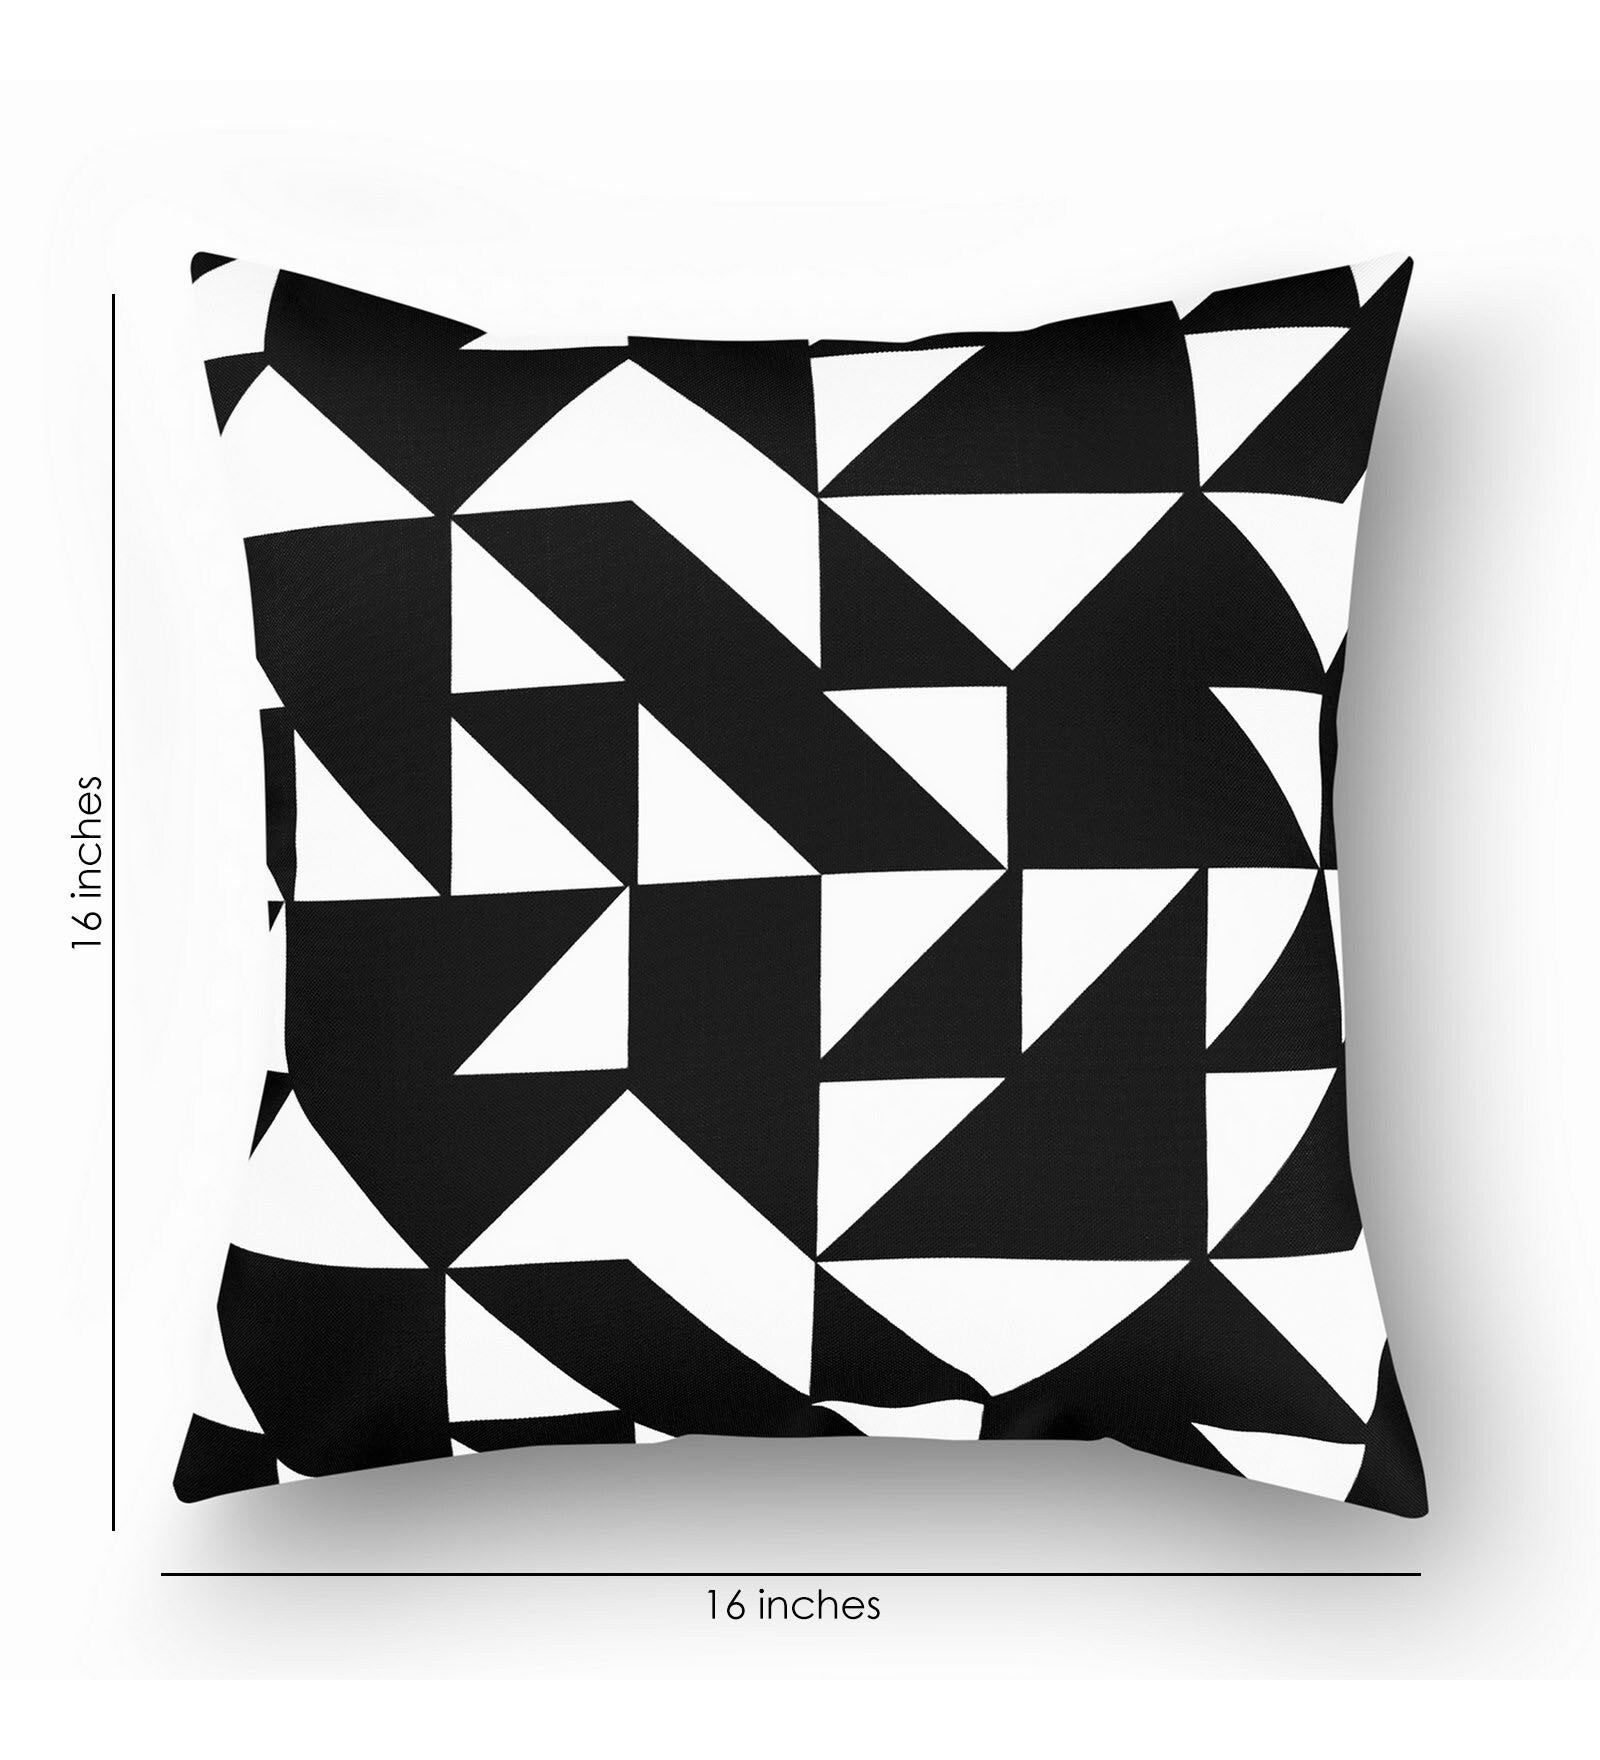 Suzi Printed Fabric Geometric Cotton 16 x 16 Inches Cushion (Set of 2) in  Black and White Colour